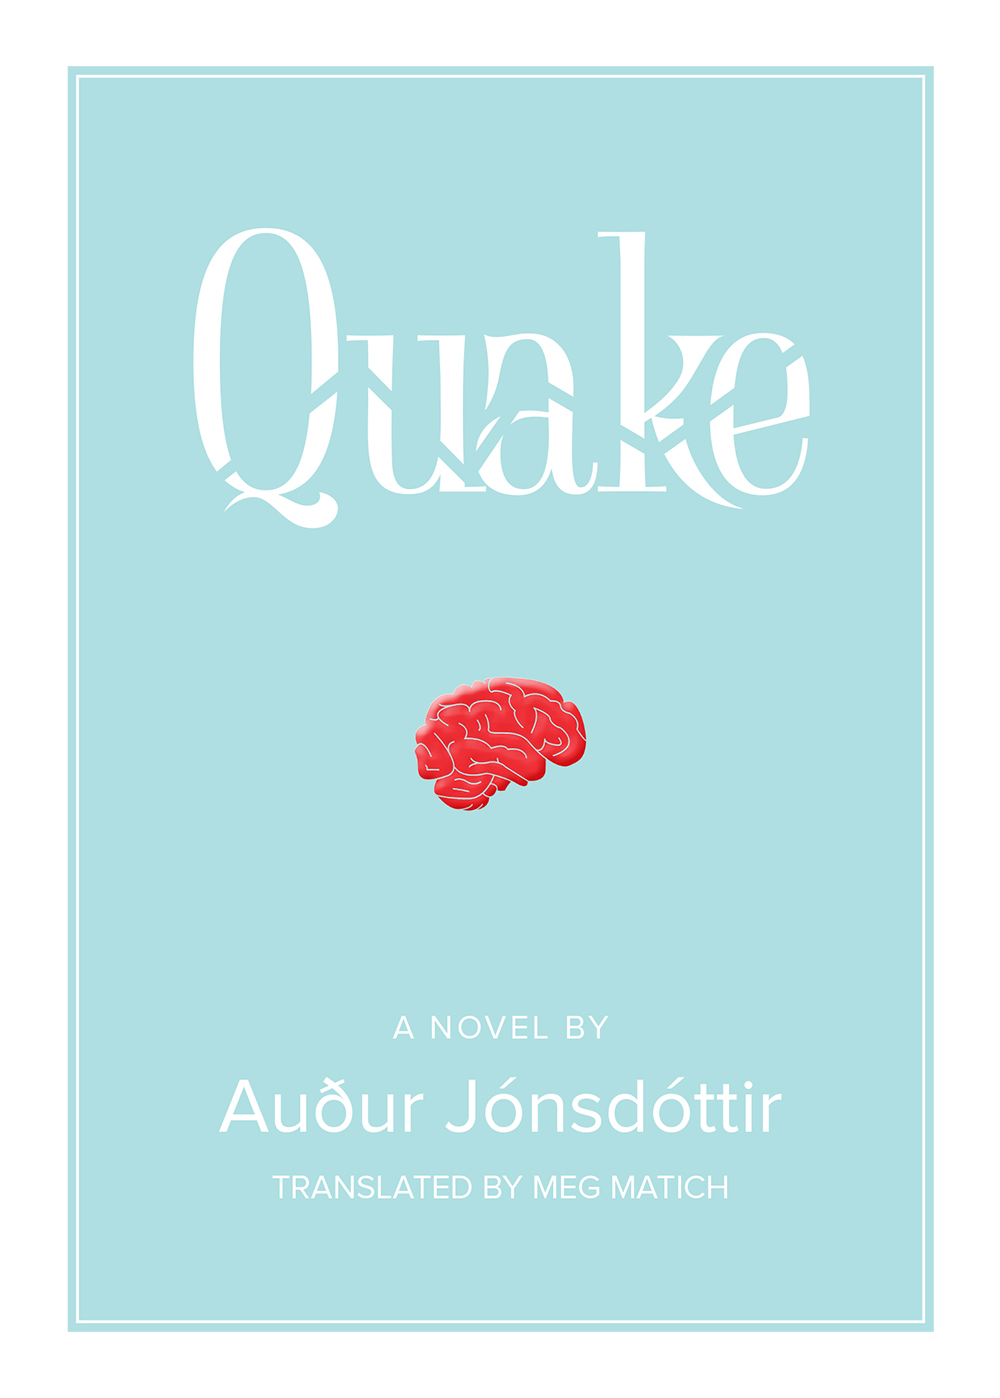 Auður Jónsdóttir's Quake book cover